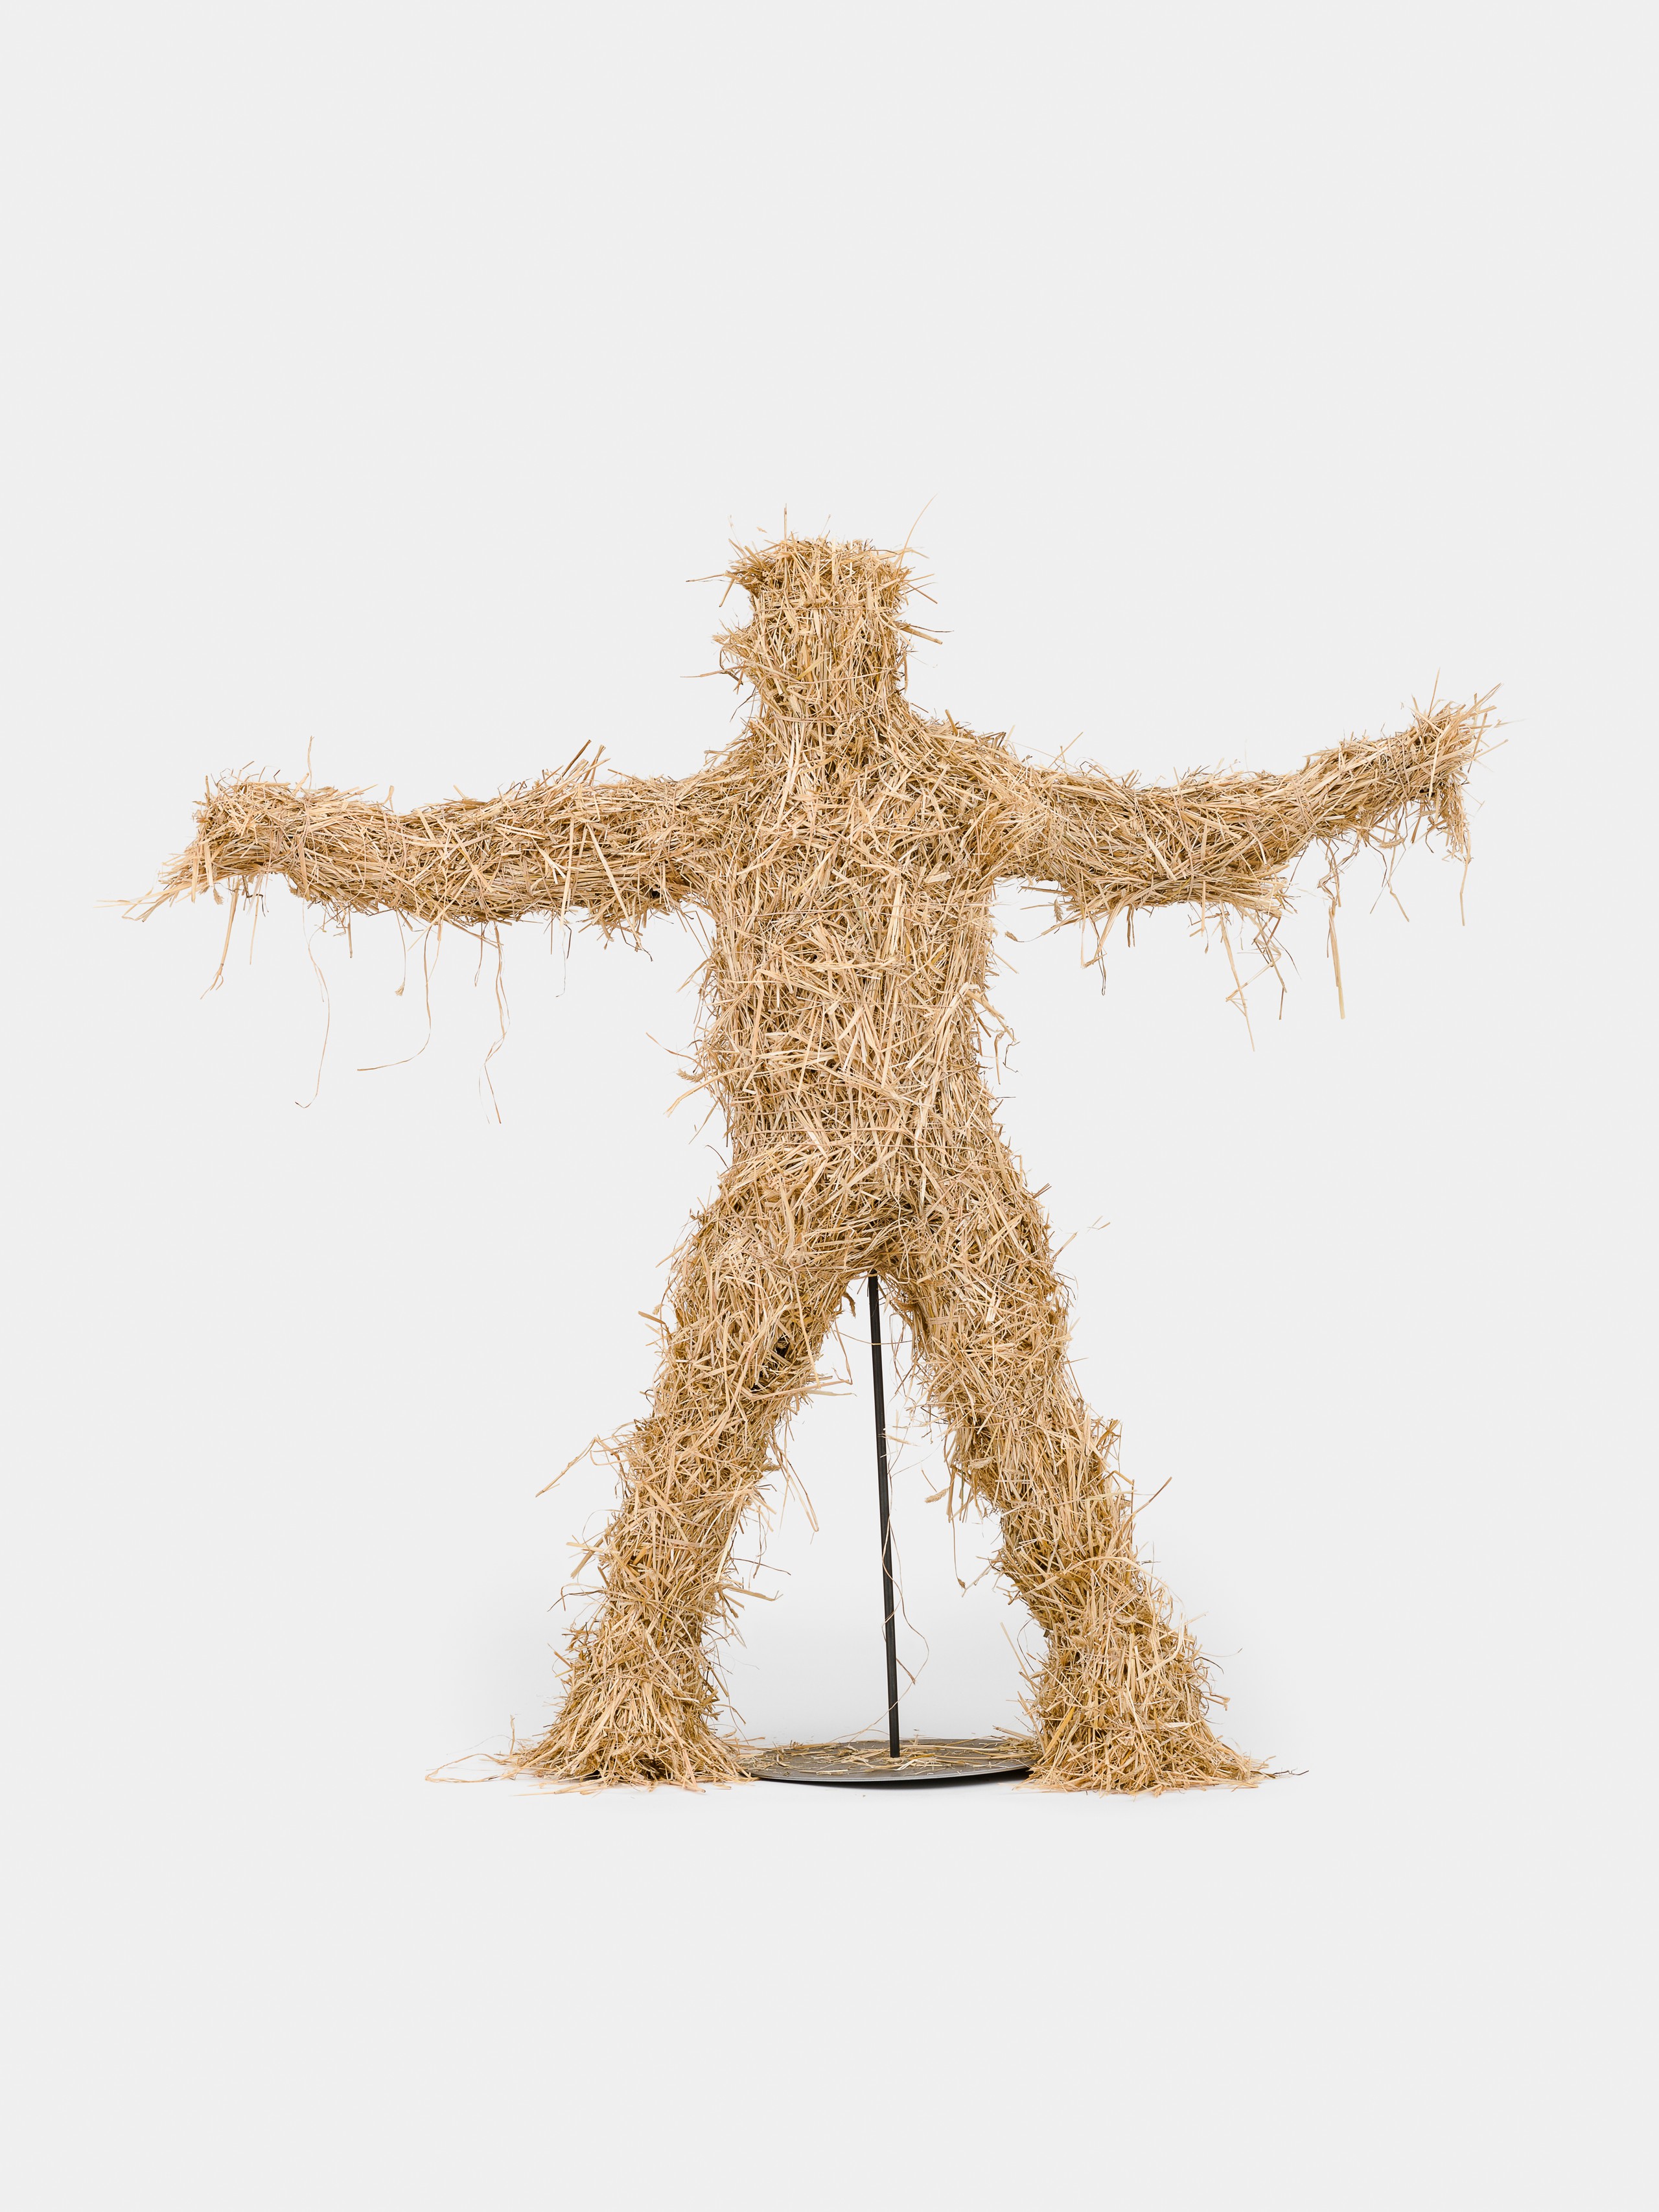 Kaspar Müller, Untitled, 2022, Straw, fiberglass, wood, steel 195 × 210 × 65 cm, 77 × 82 1/2 × 25 1/2 in